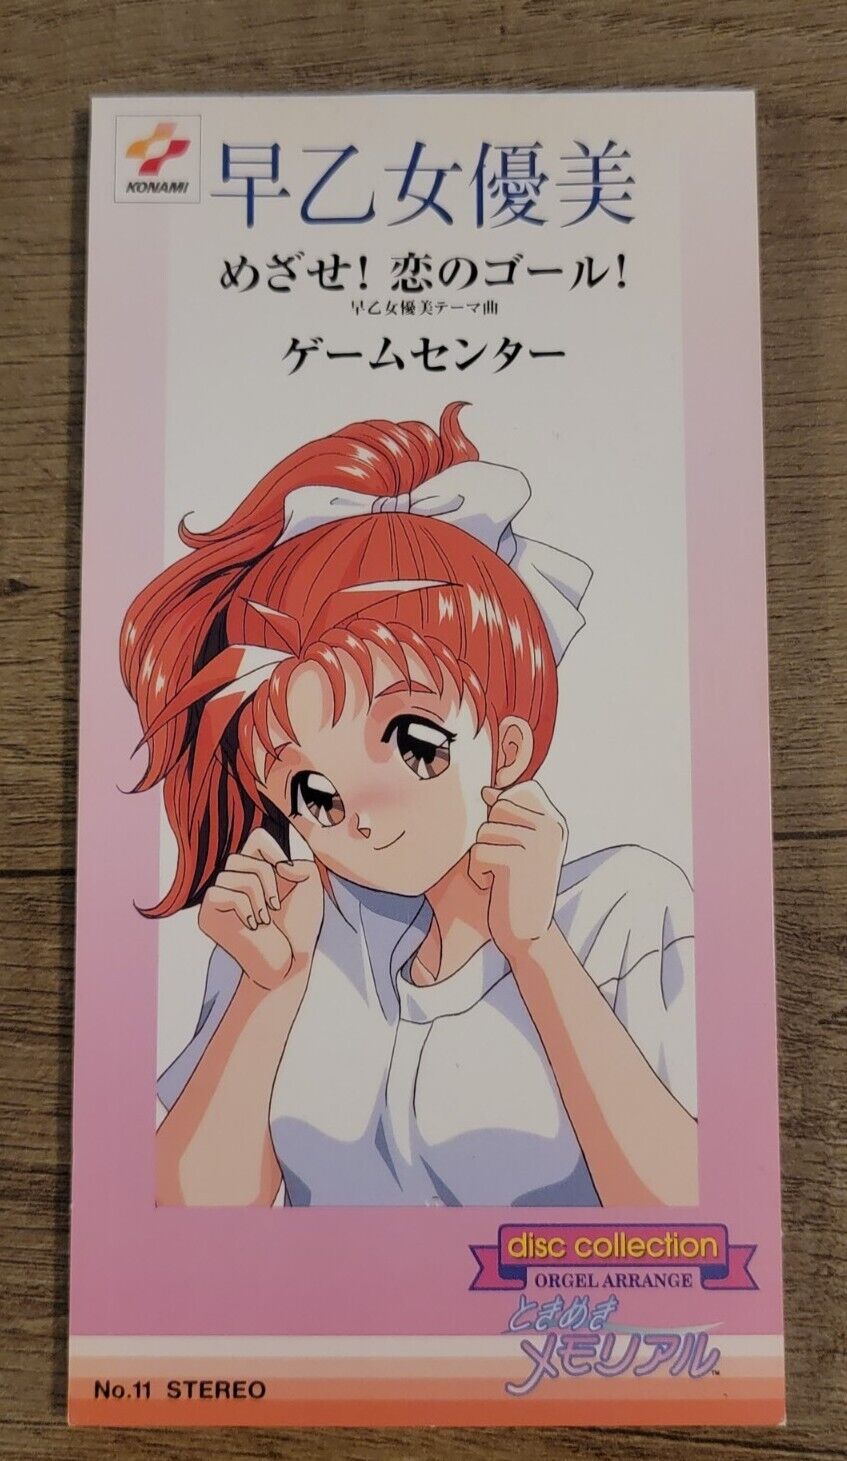 Tokimeki Memorial Yumi Saotome CD Single Prize Disc Collection No.11 1996 Konami